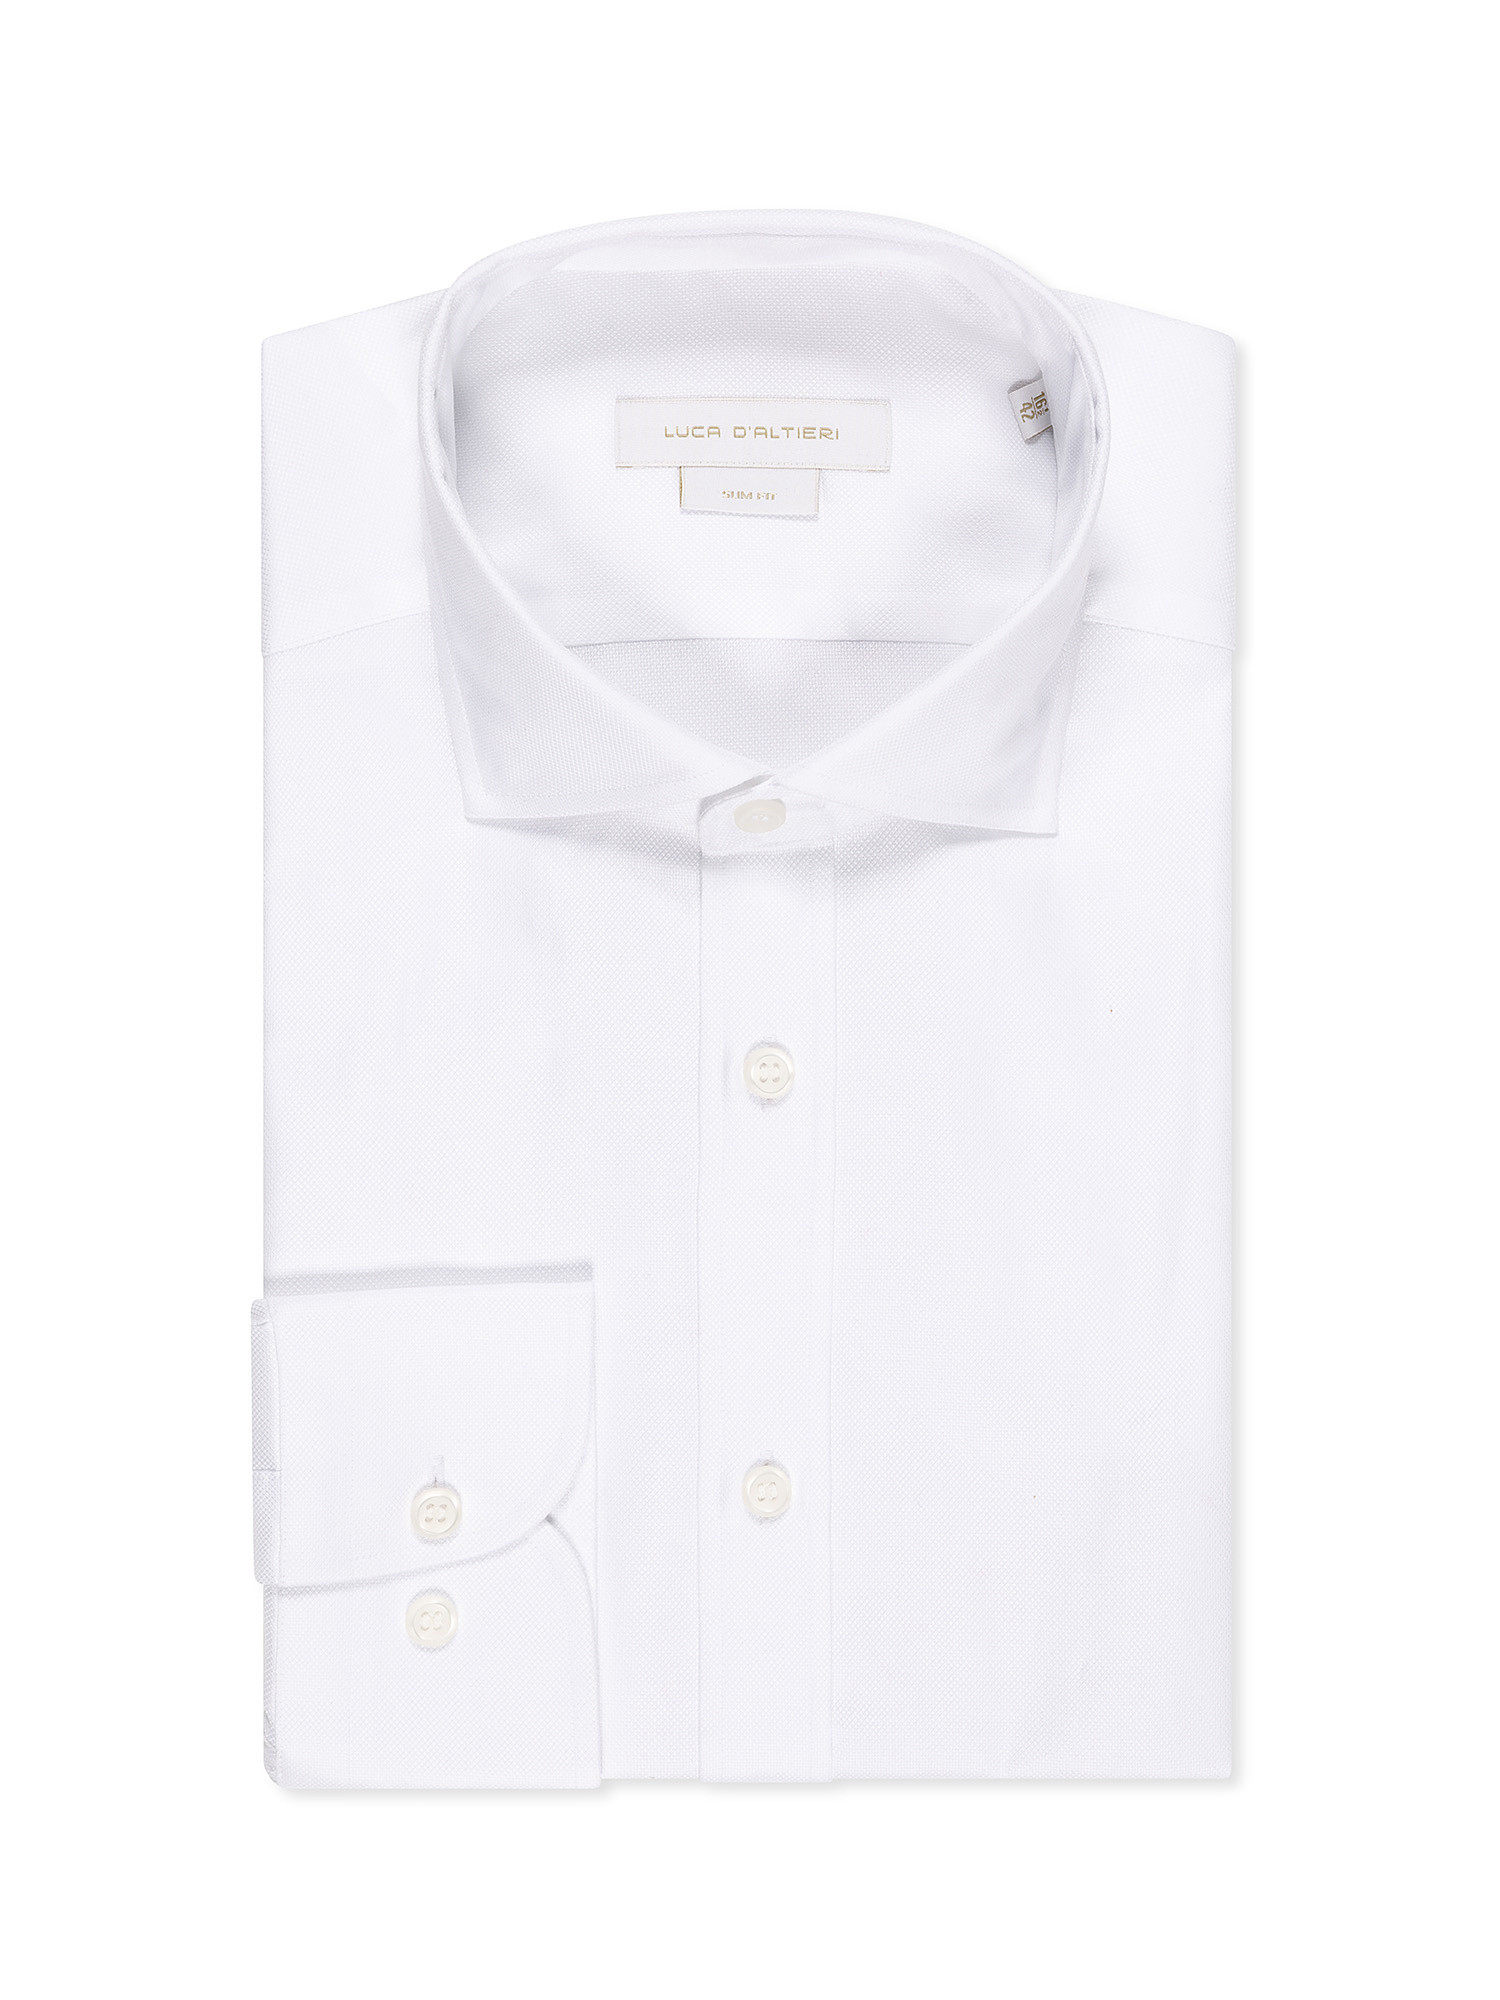 Camicia slim fit in puro cotone, Bianco 1, large image number 0